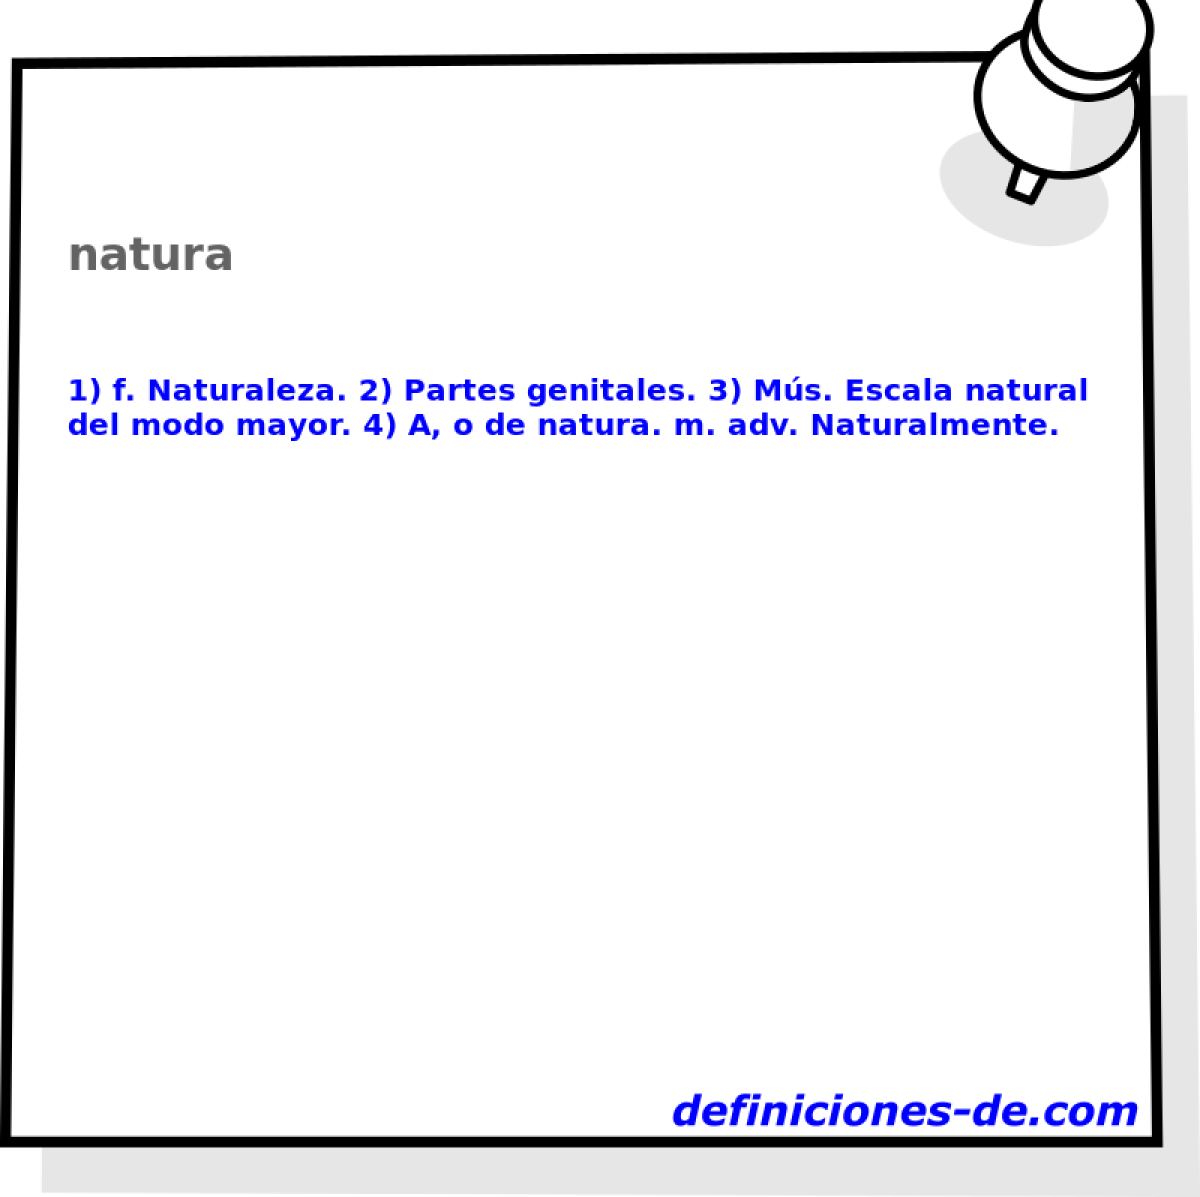 Natura | Significado de natura